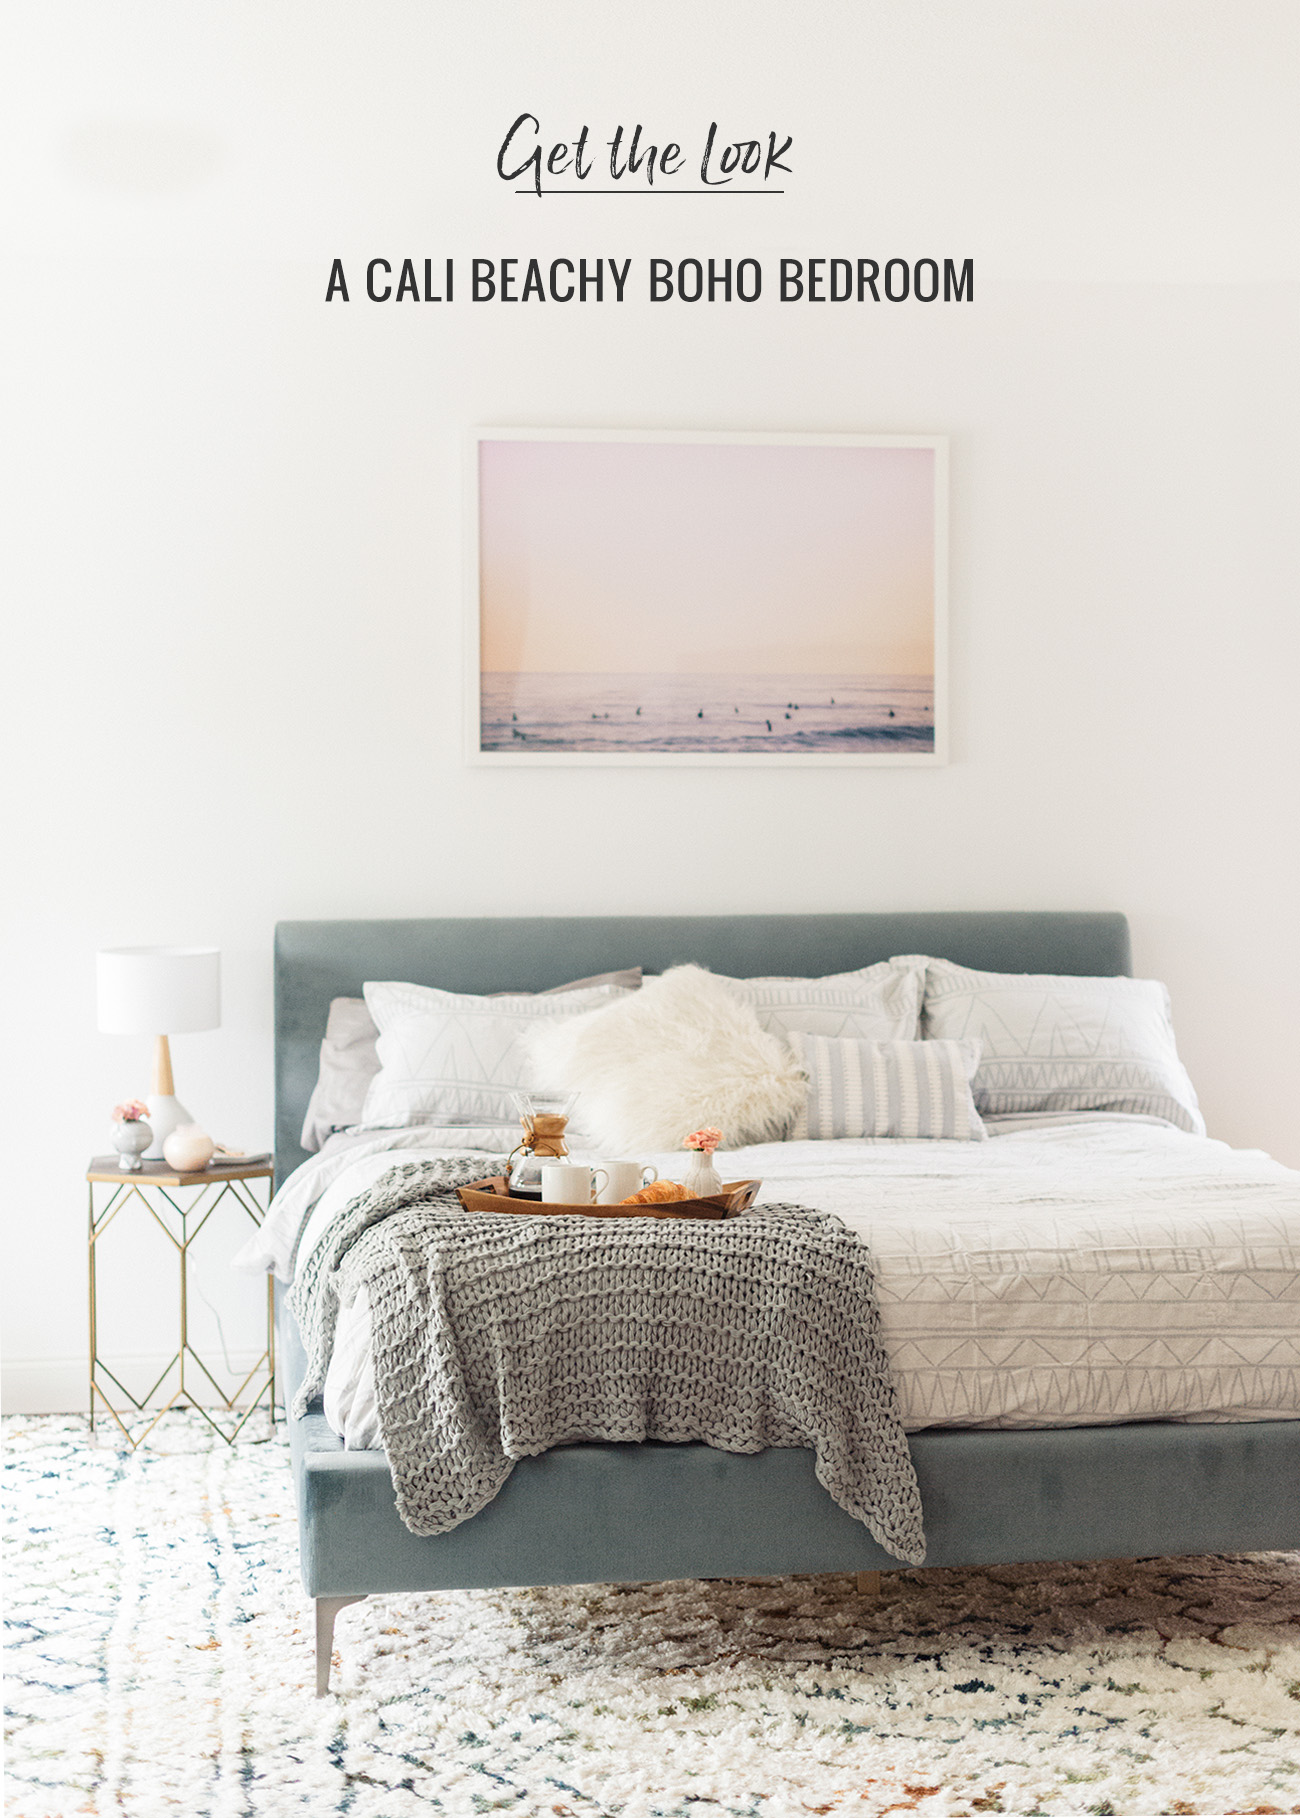 Get the Look: A Cali Beachy Boho Bedroom